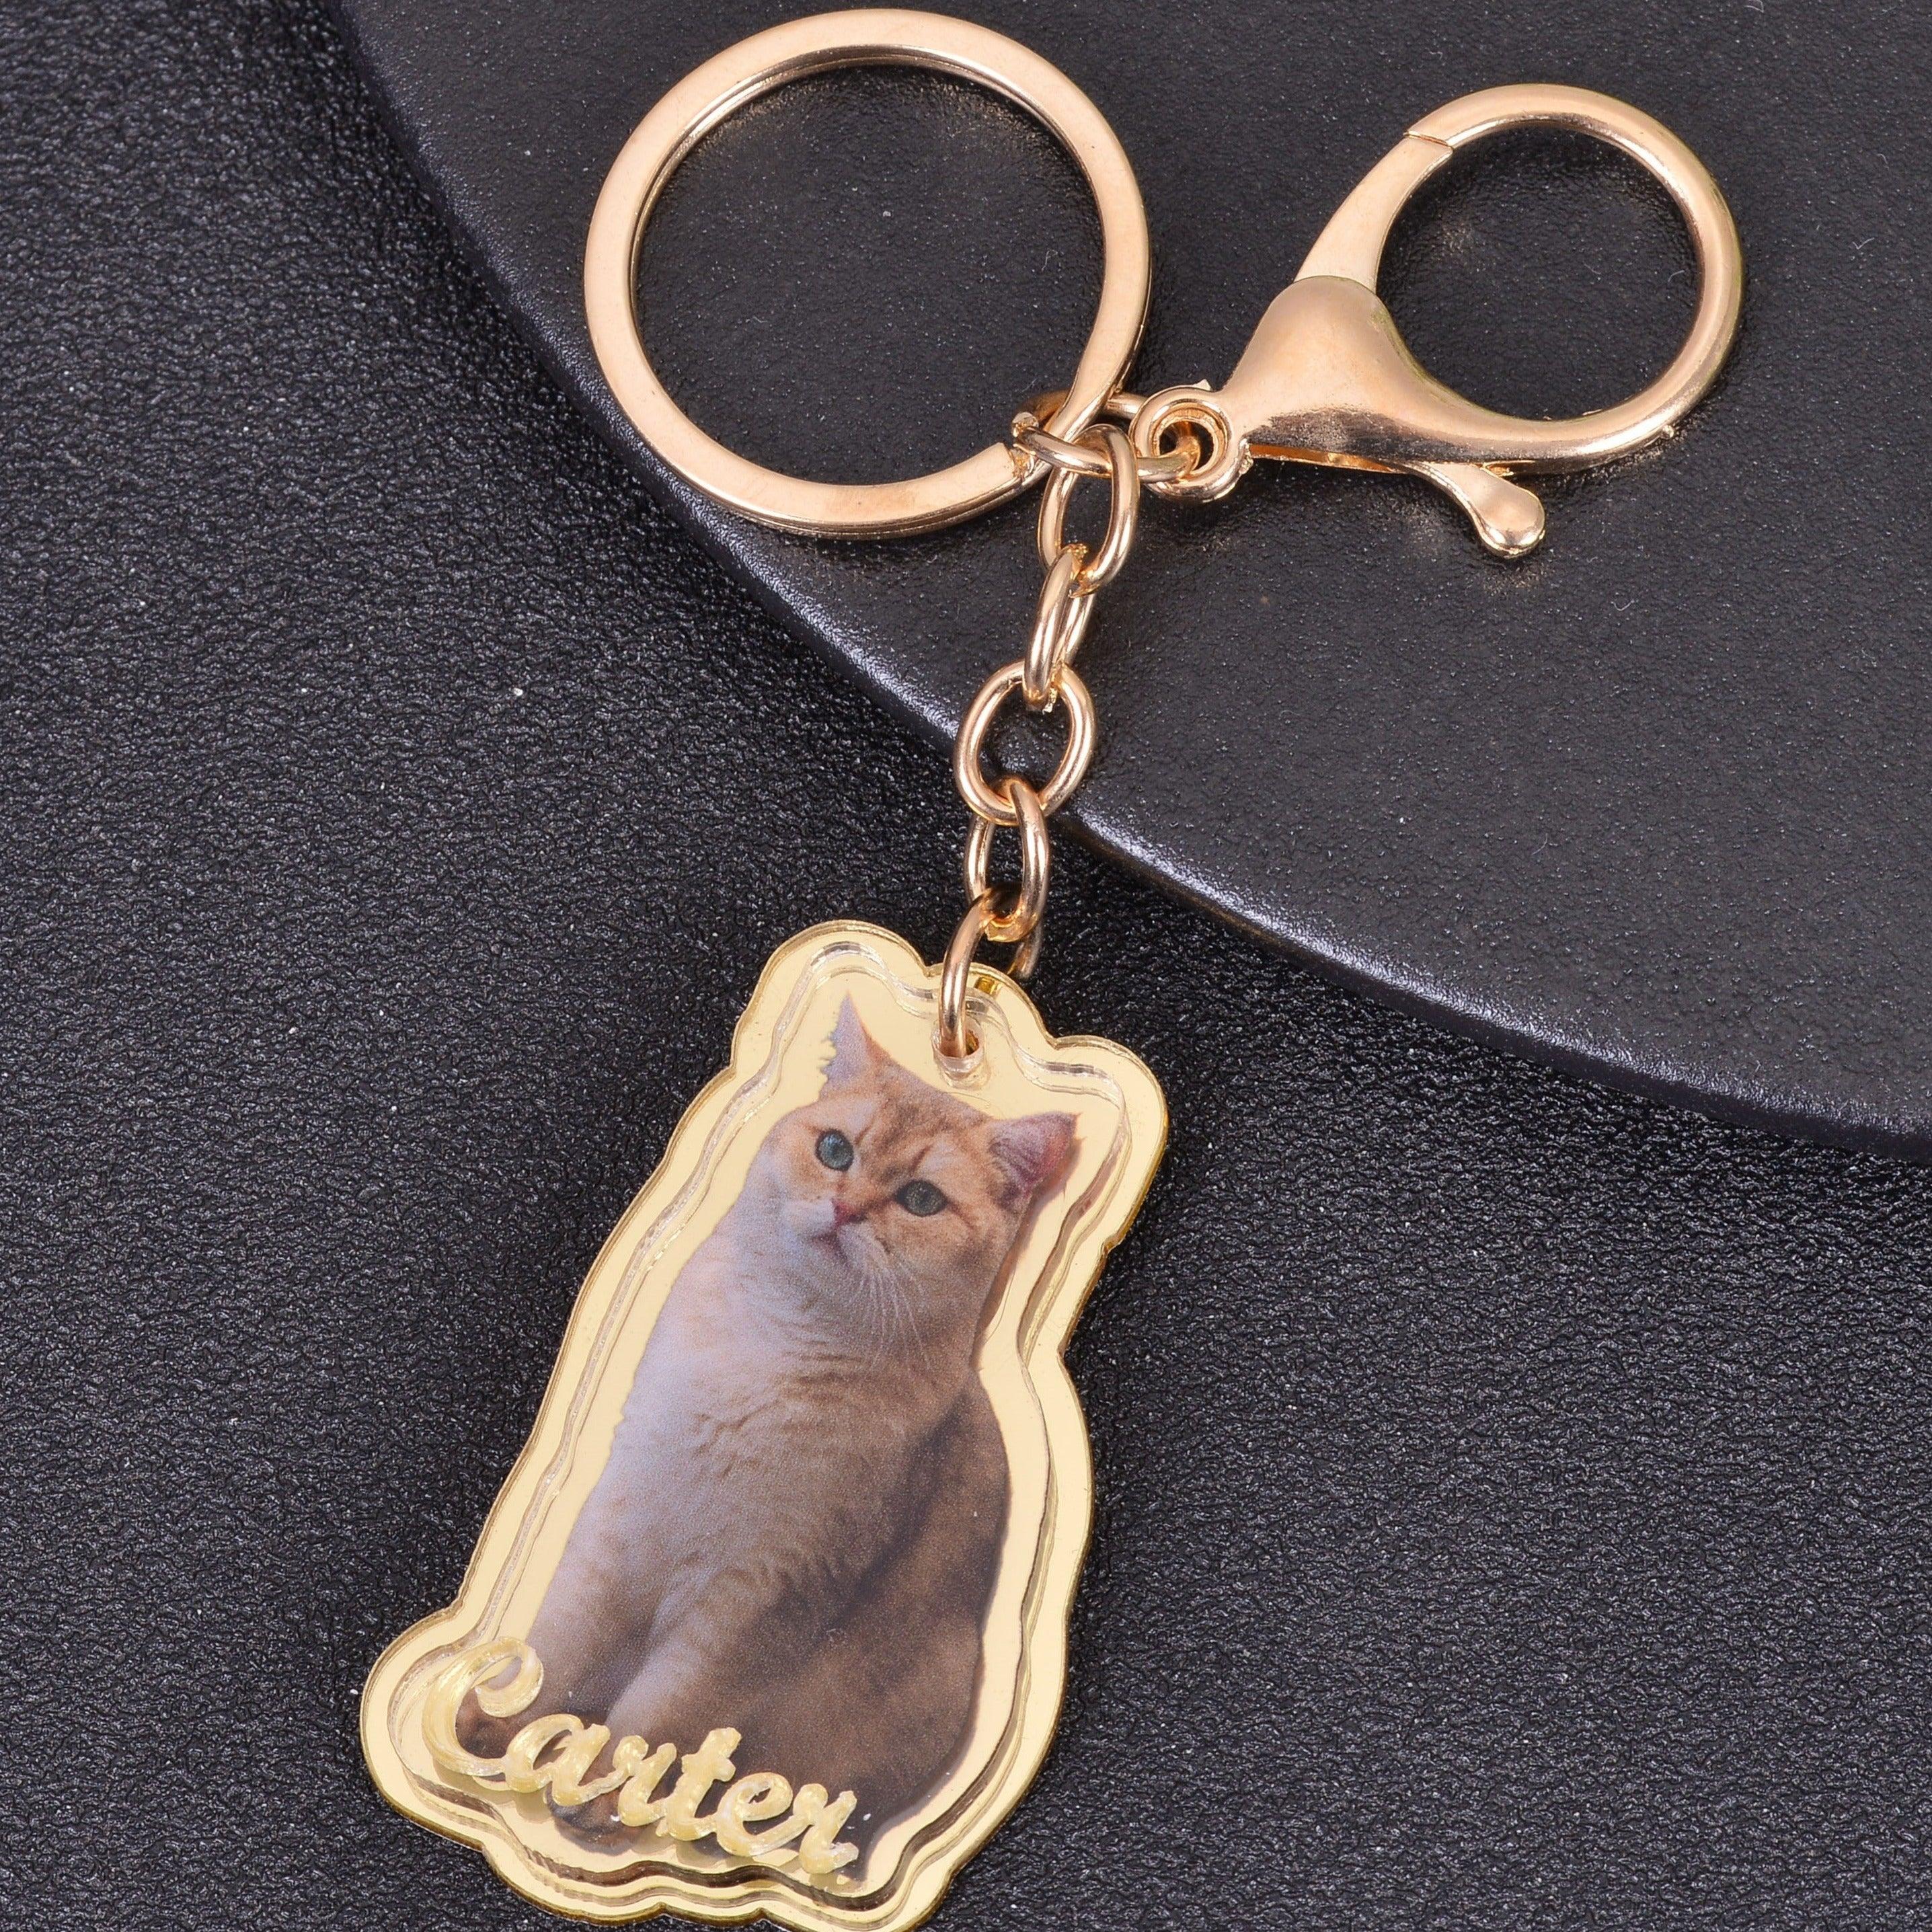 Pendantify Buy Photo Pet Keychain